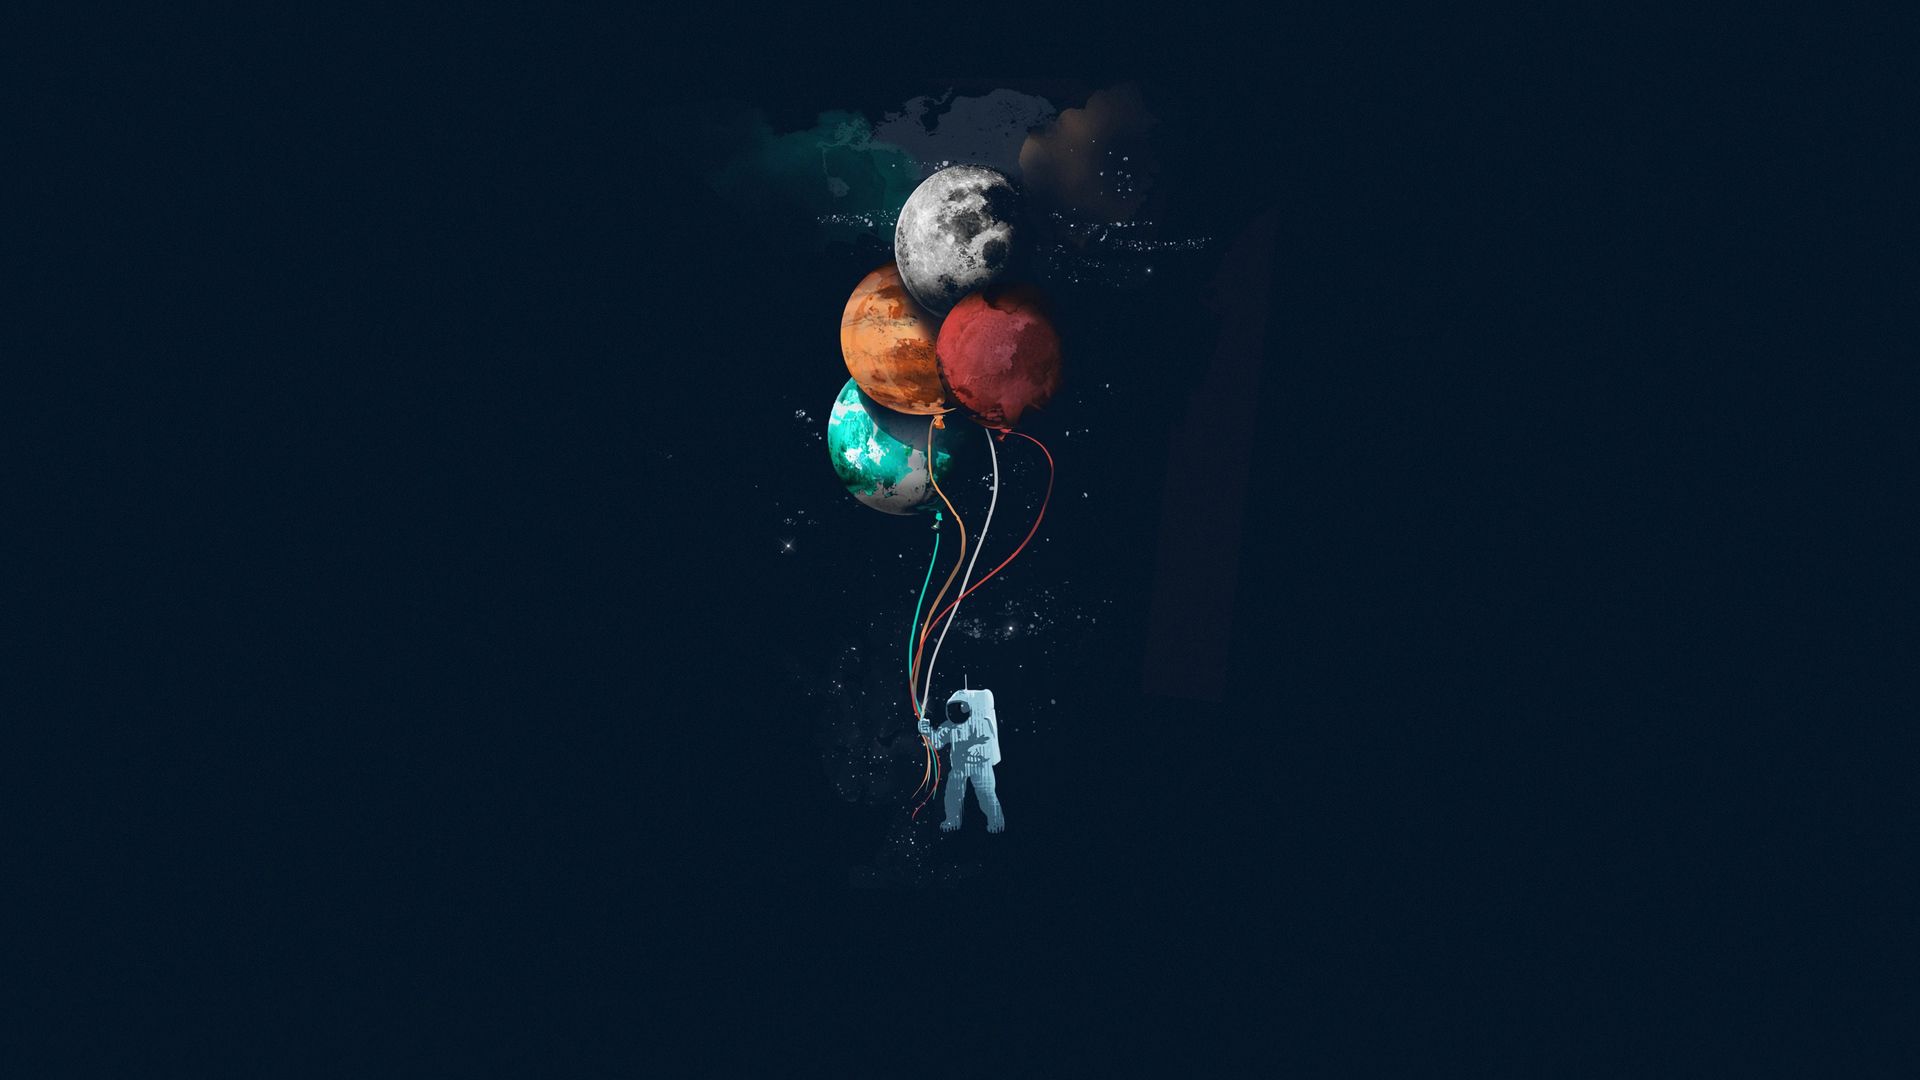 Astronaut, planets, balloons, dark background, creative, art, universe, space, planet, creative, wallpaper, dark background, creative, art, universe, space, planet - Space, astronaut